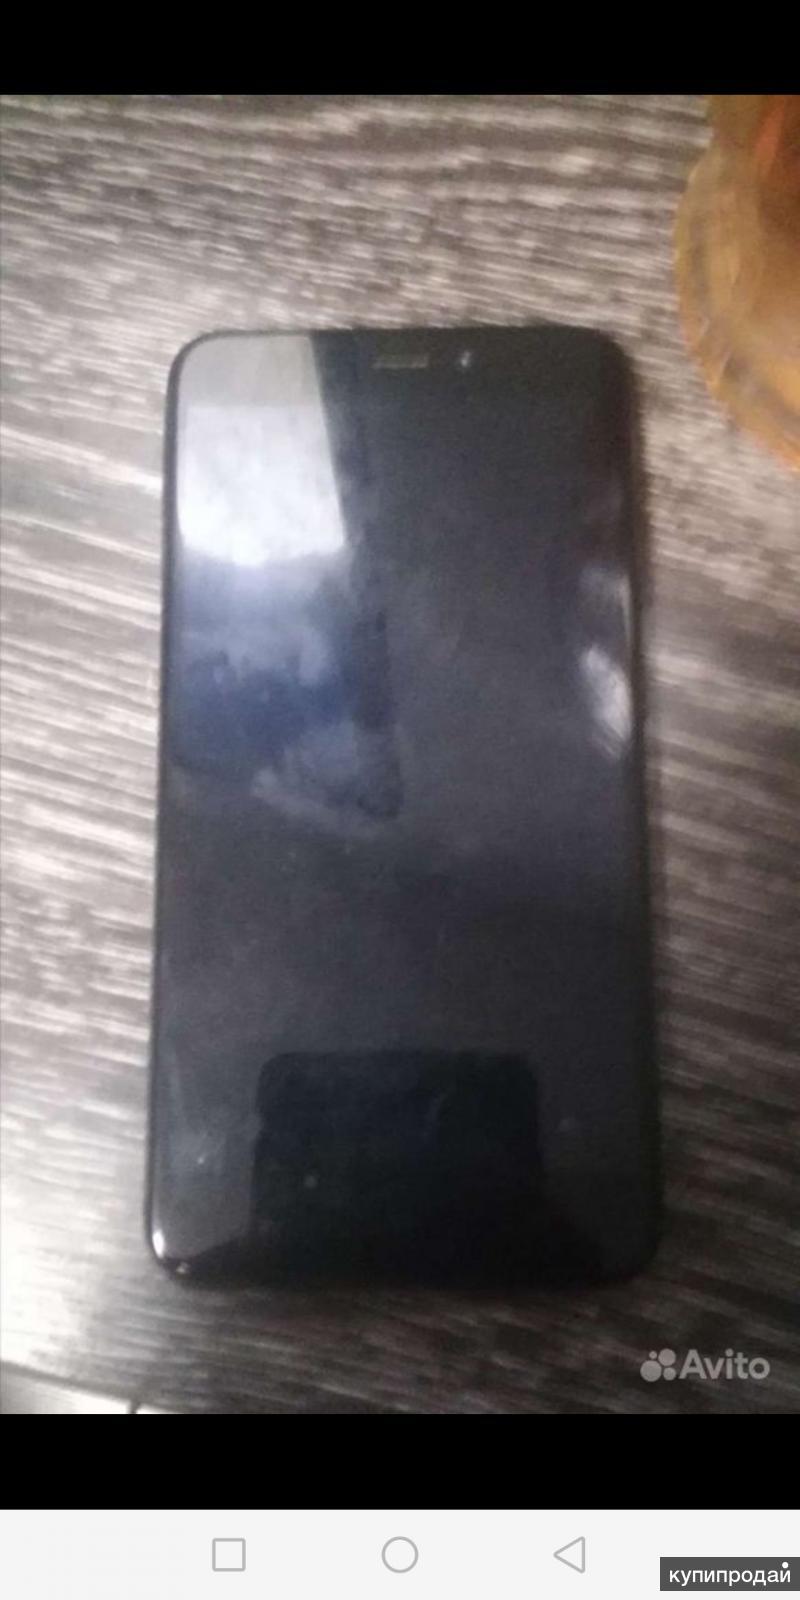 Xiaomi Redmi Note 7 Батарея